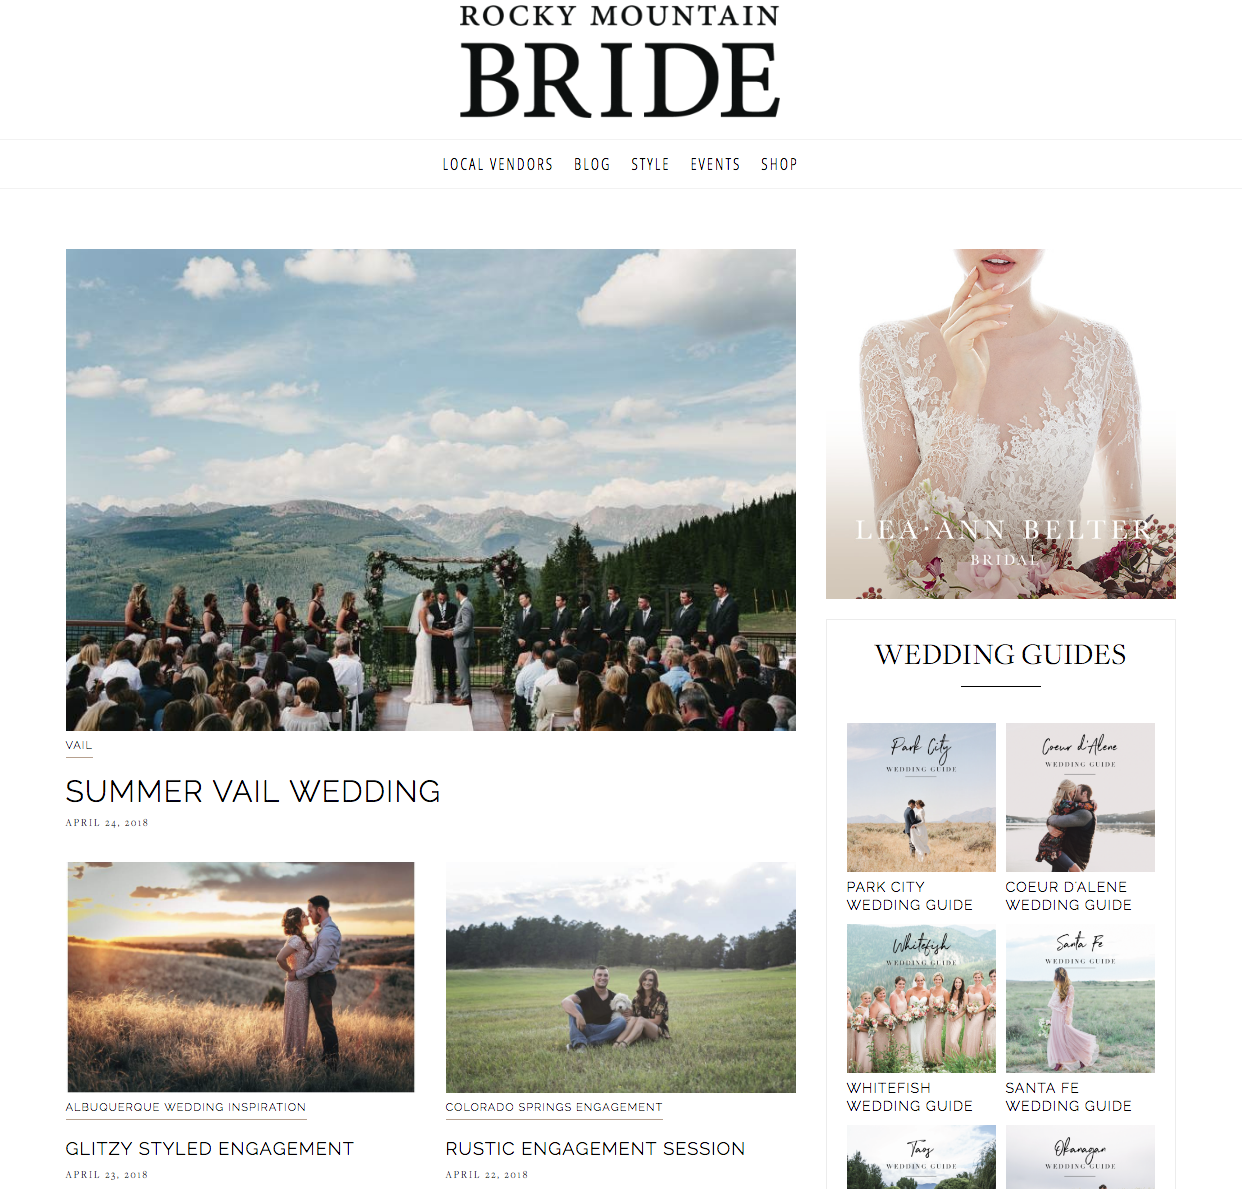 Summer Vail Wedding In Rocky Mountain Bride